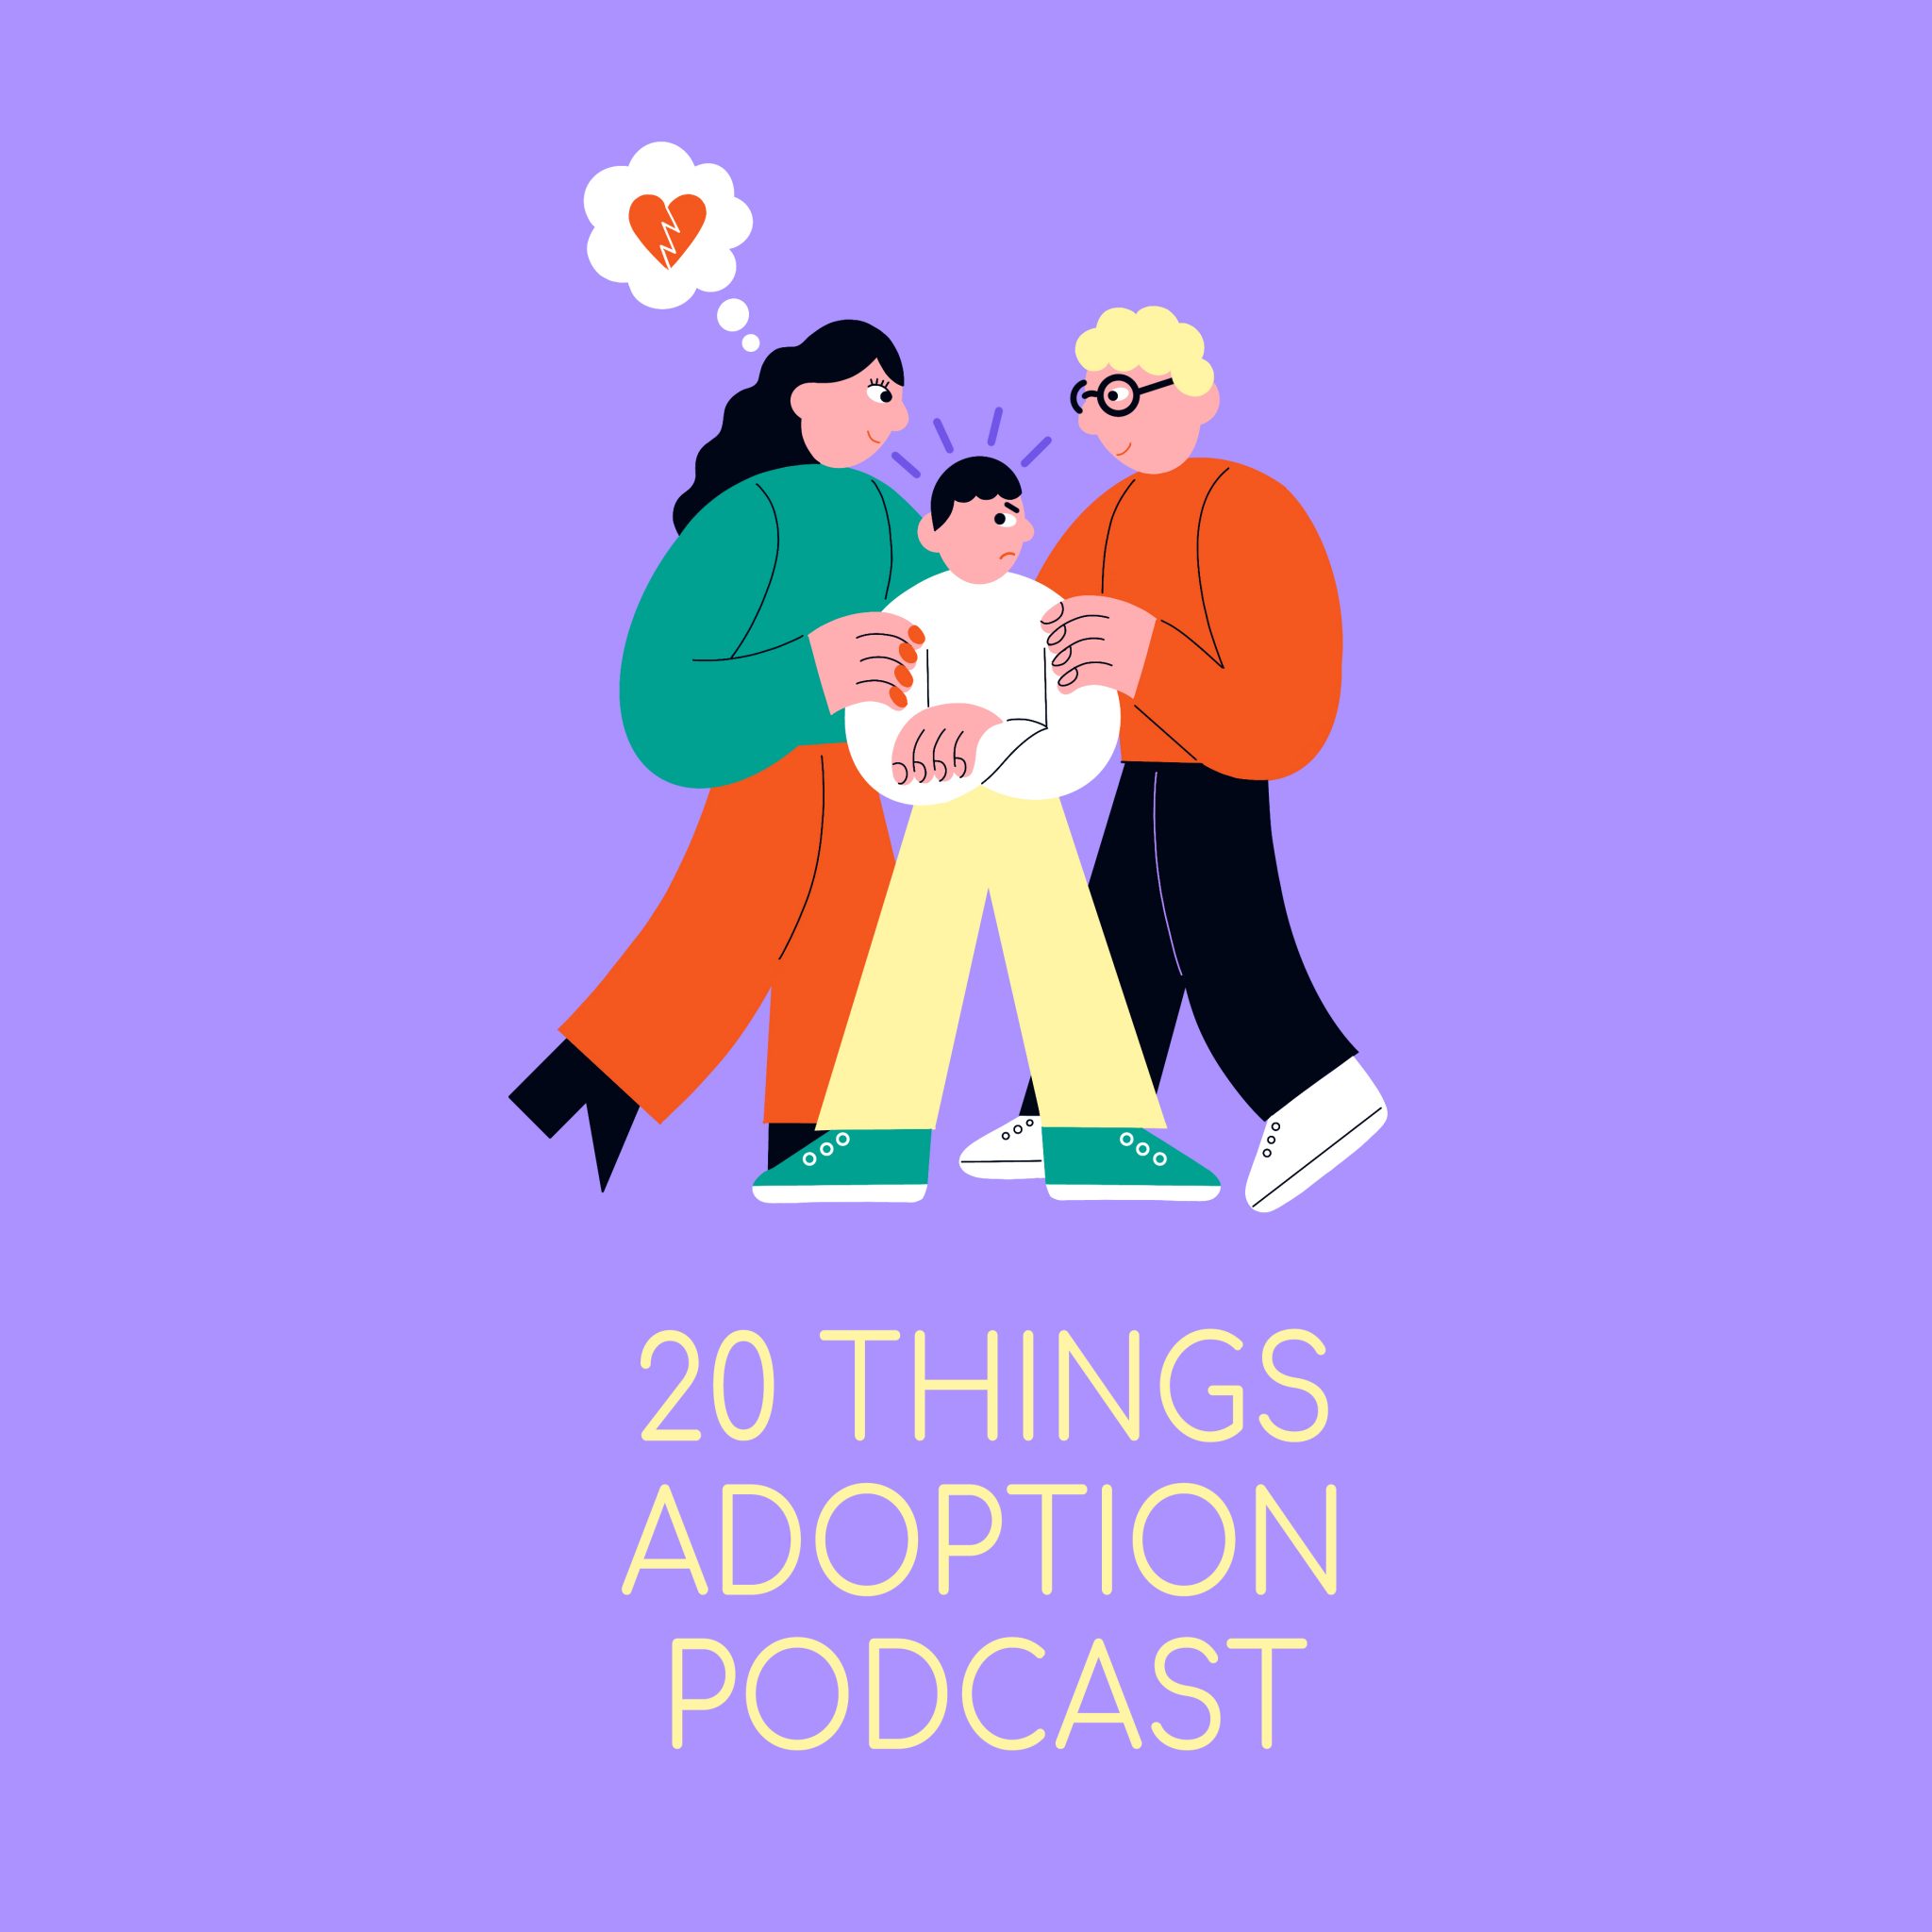 Good News for the World of Adoption Via Podcast